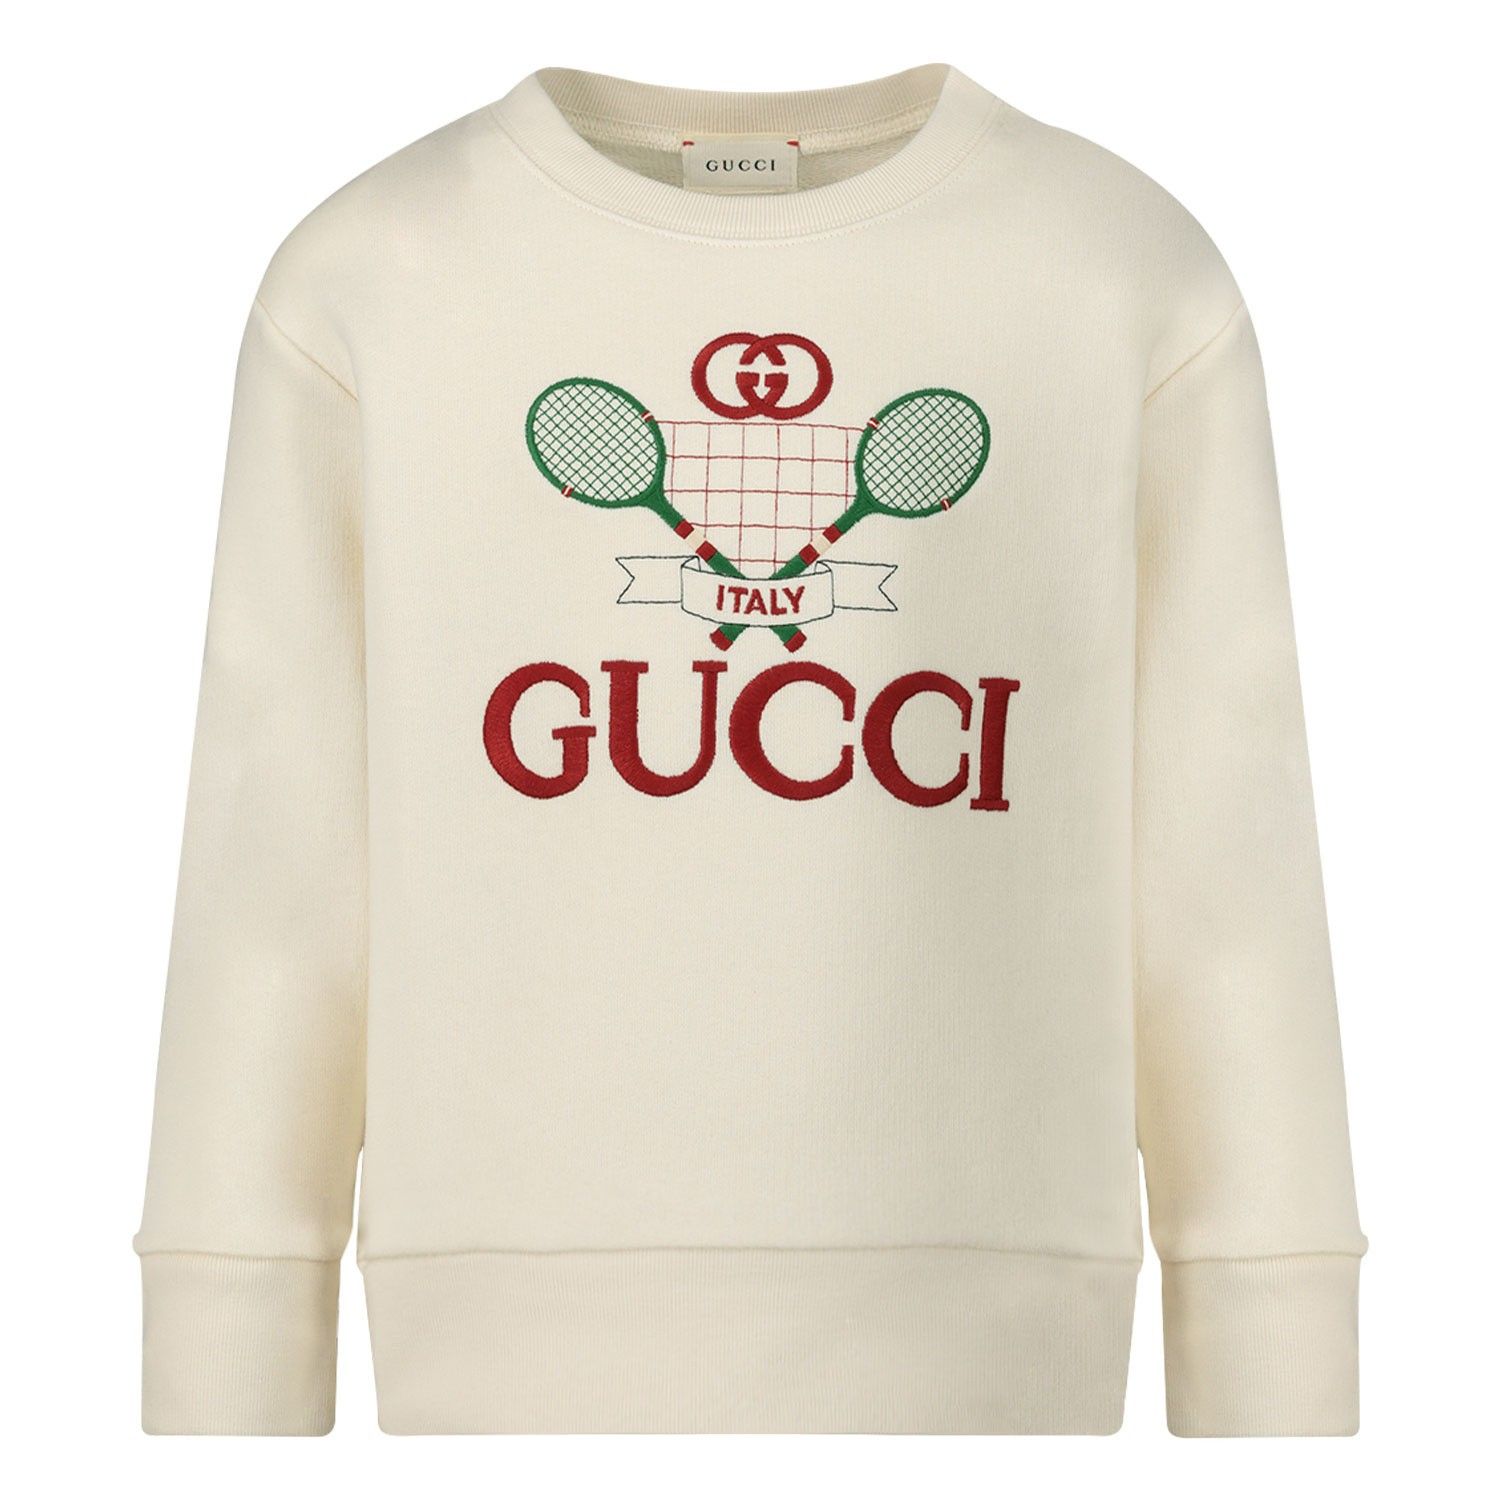 gucci tennis racket sweater